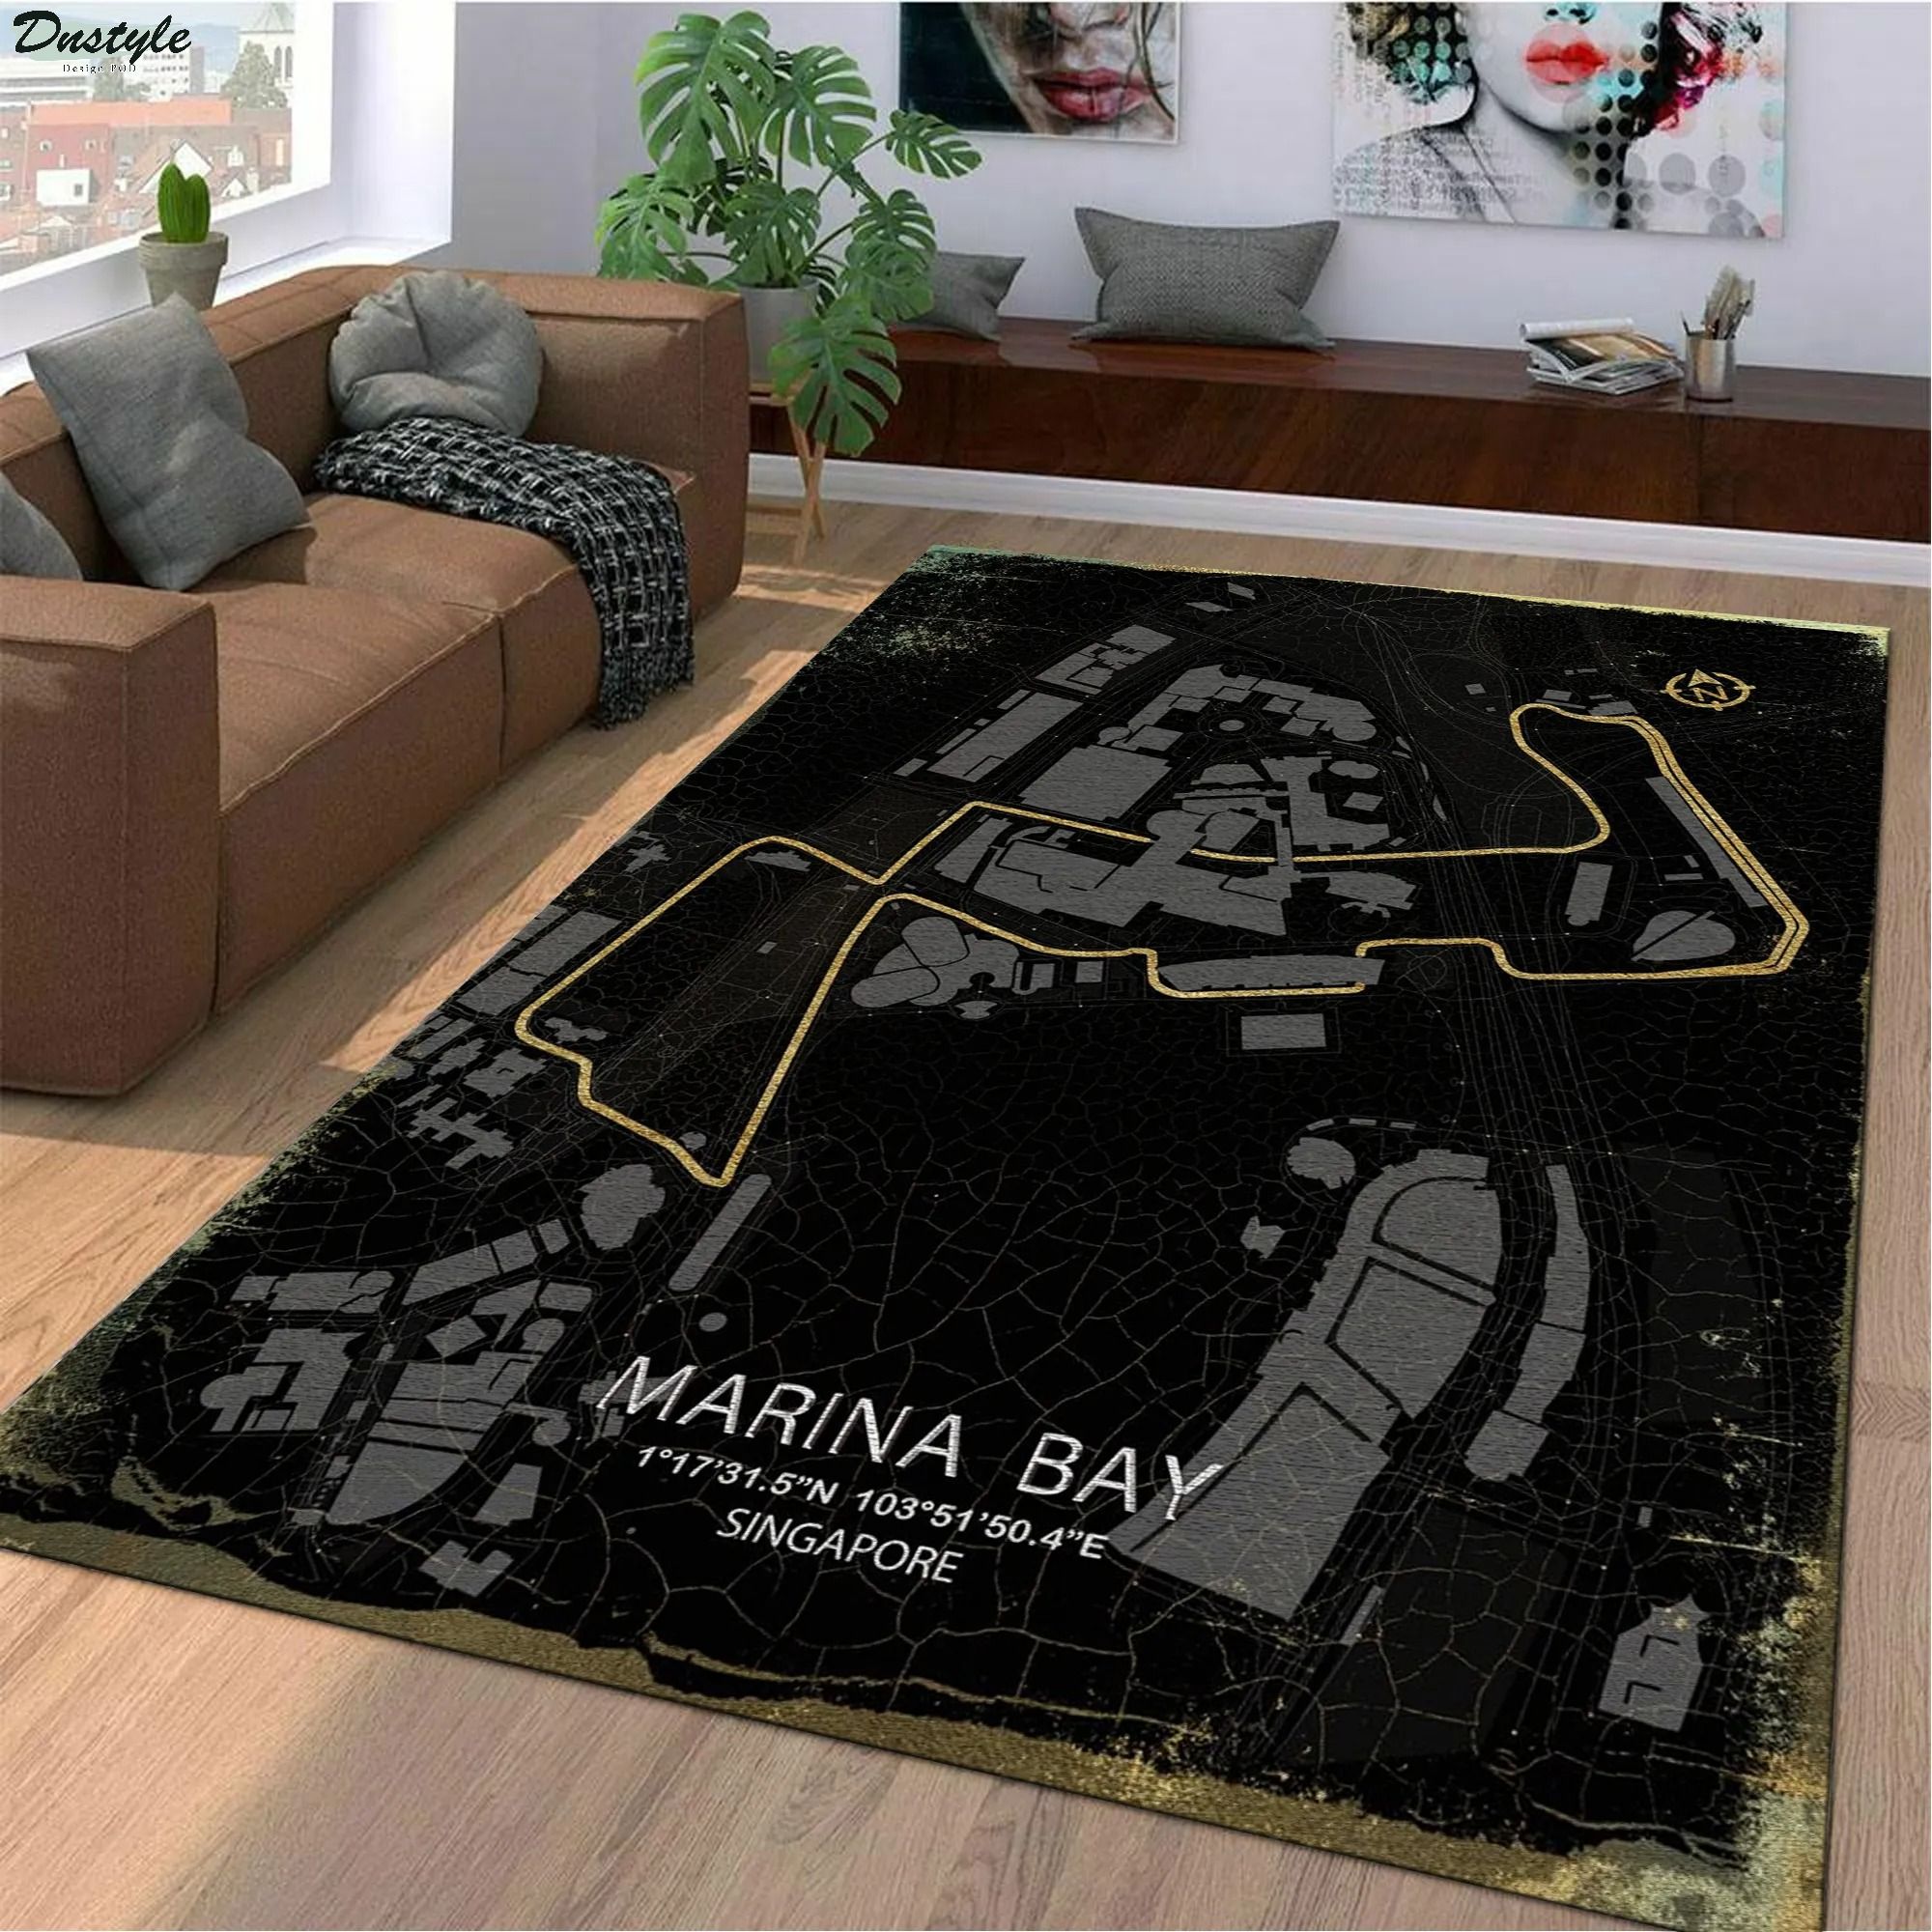 Marina bay f1 track rug